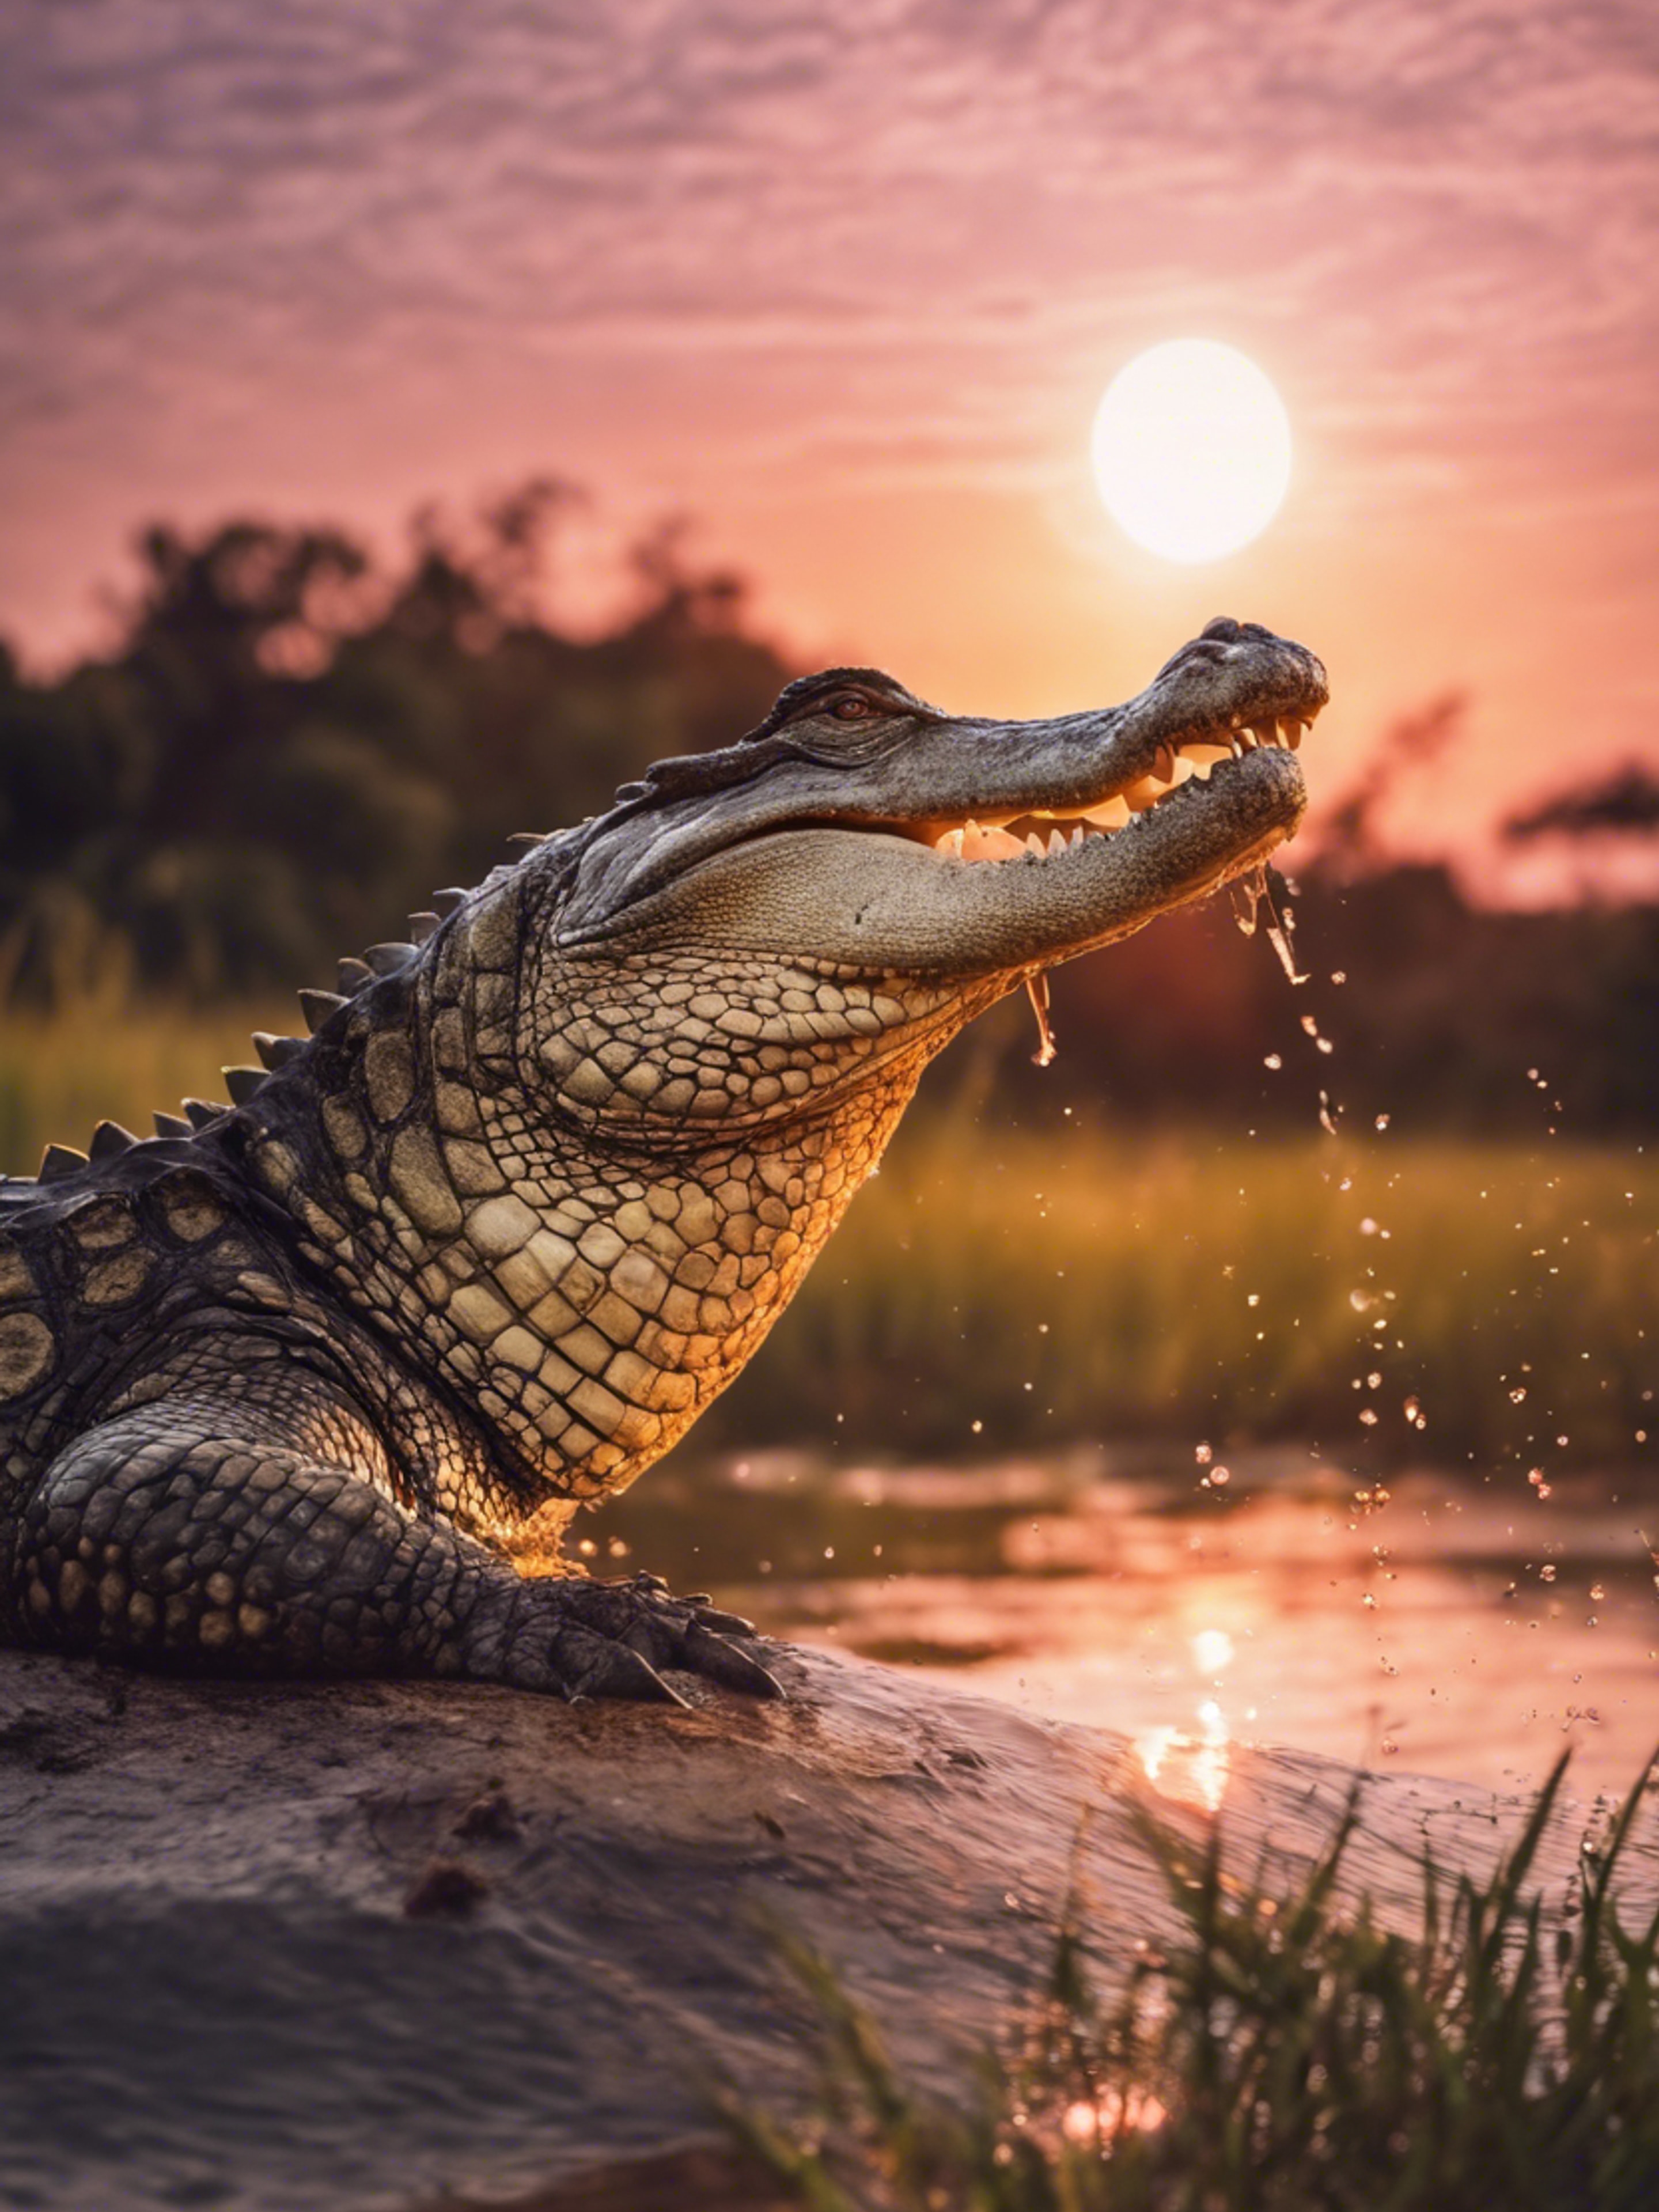 A beautiful sunrise with a crocodile breaking the surface under a rosy sky. Tapeta[8e947b6adb0246b9980f]